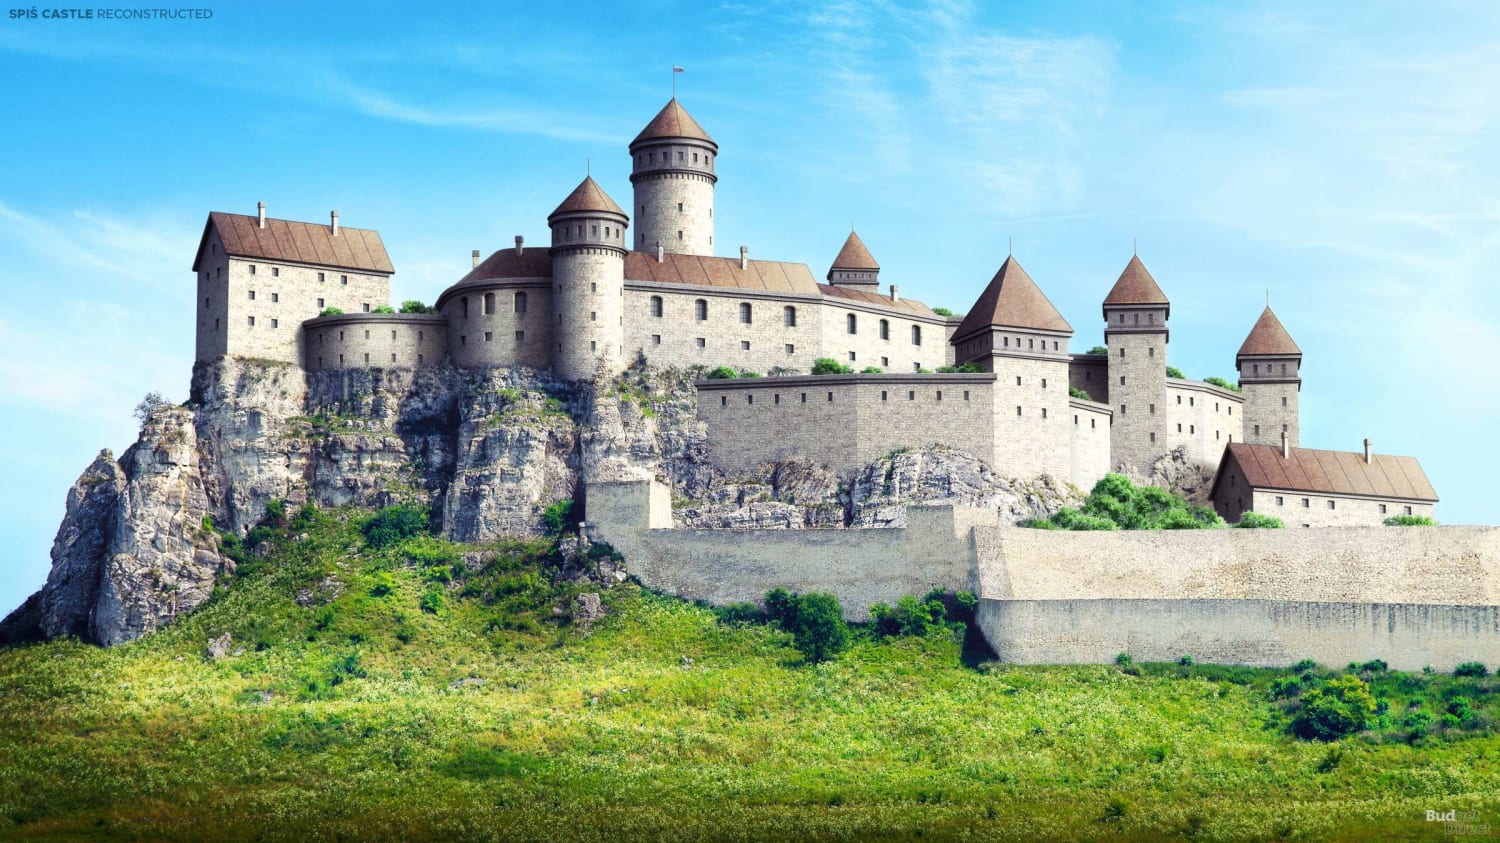 7 Historic European Castles Virtually Rebuilt Before Your Very Eyes